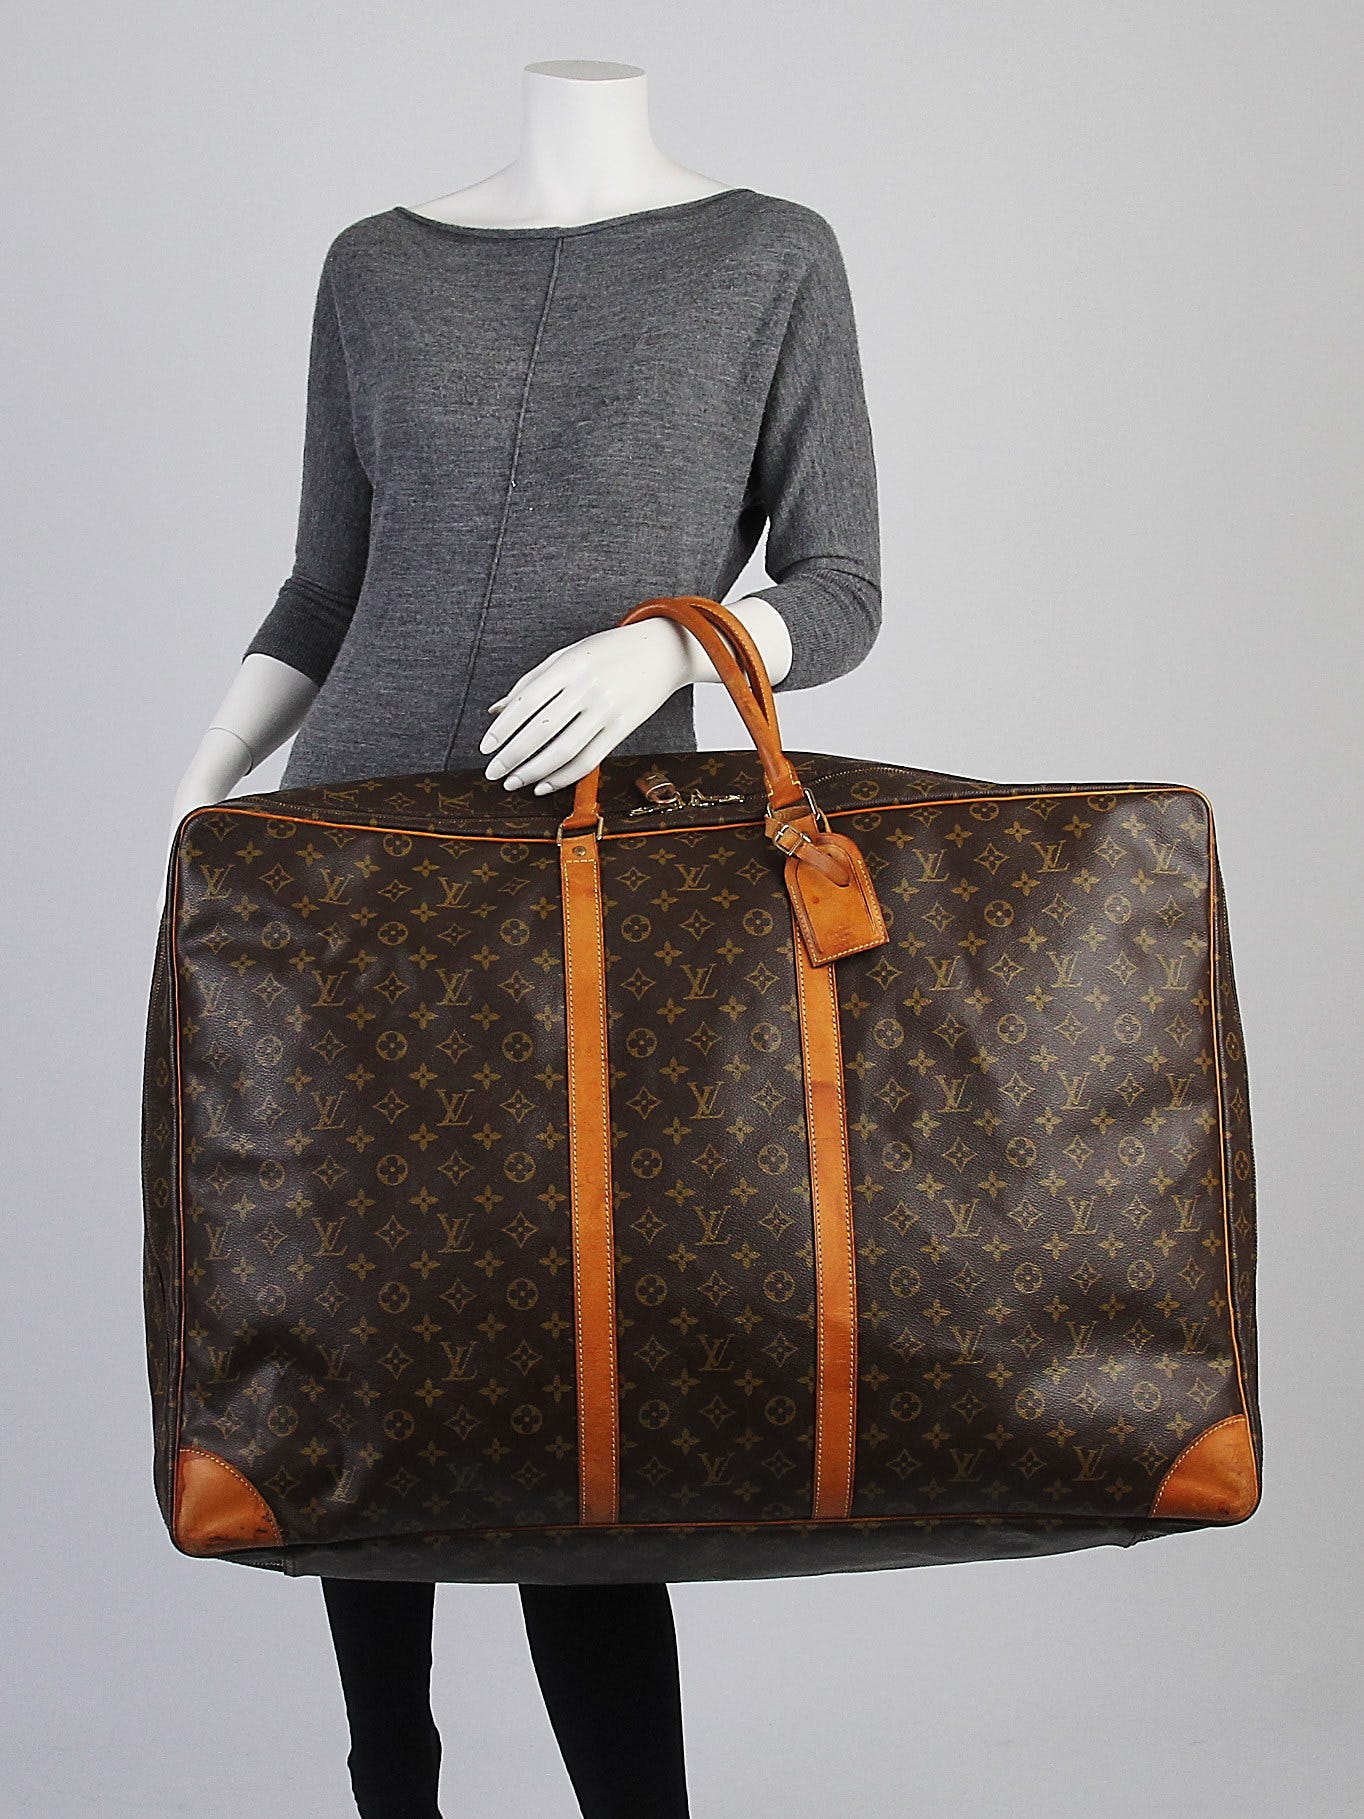 Louis Vuitton Sirius 70 Soft-Sided Luggage, Monogram Canvas, Large Suitcase